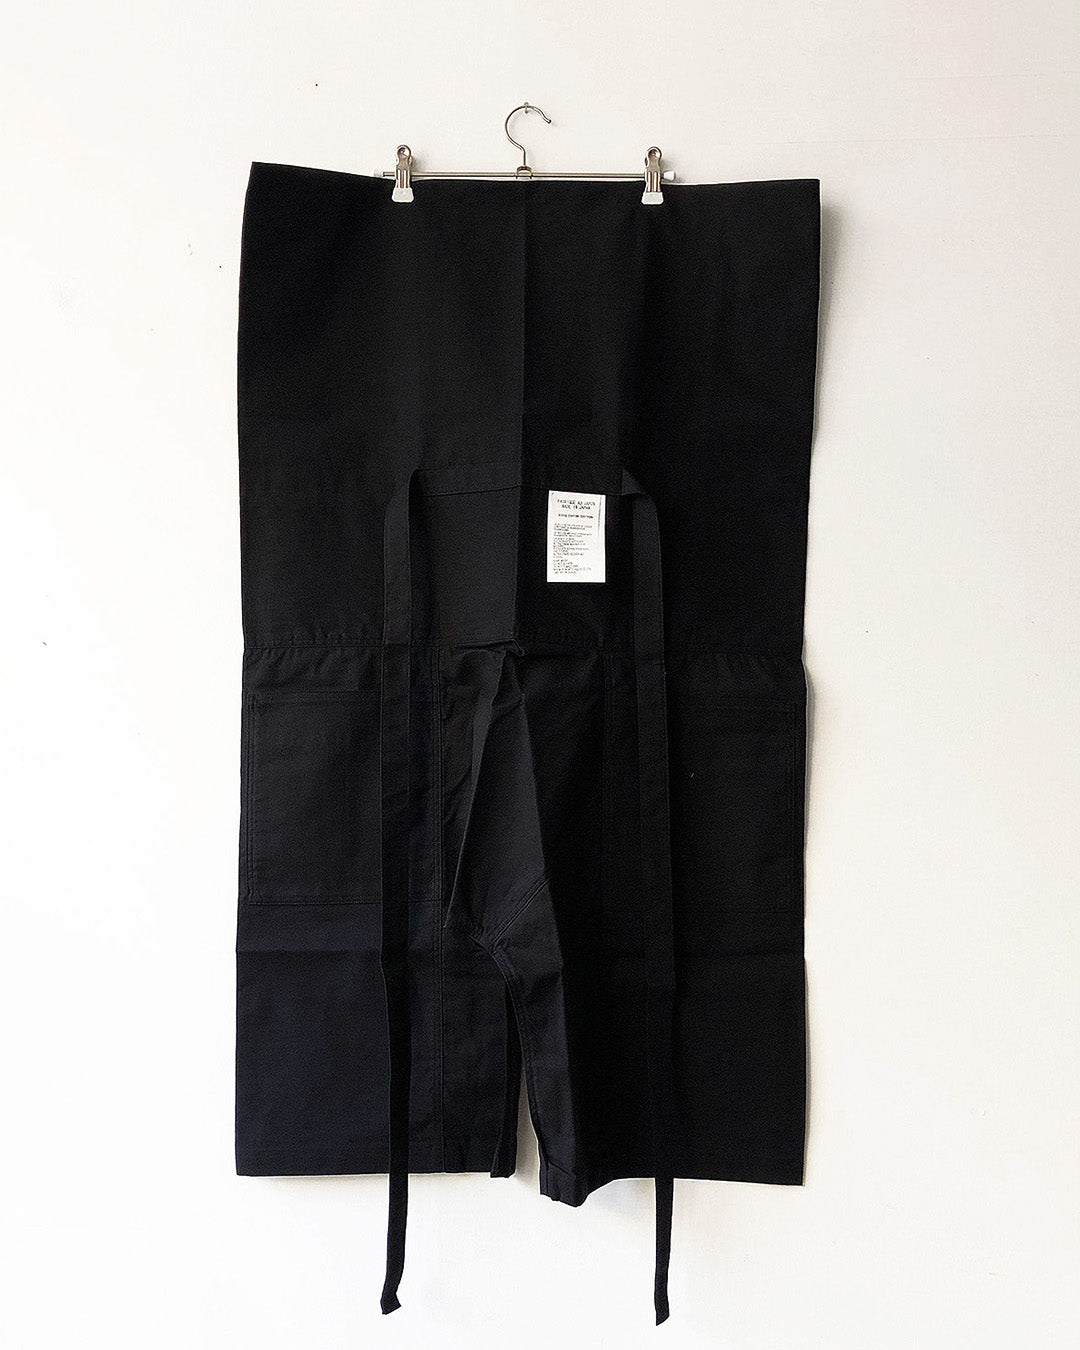 TUKI fisherman's shorts / black